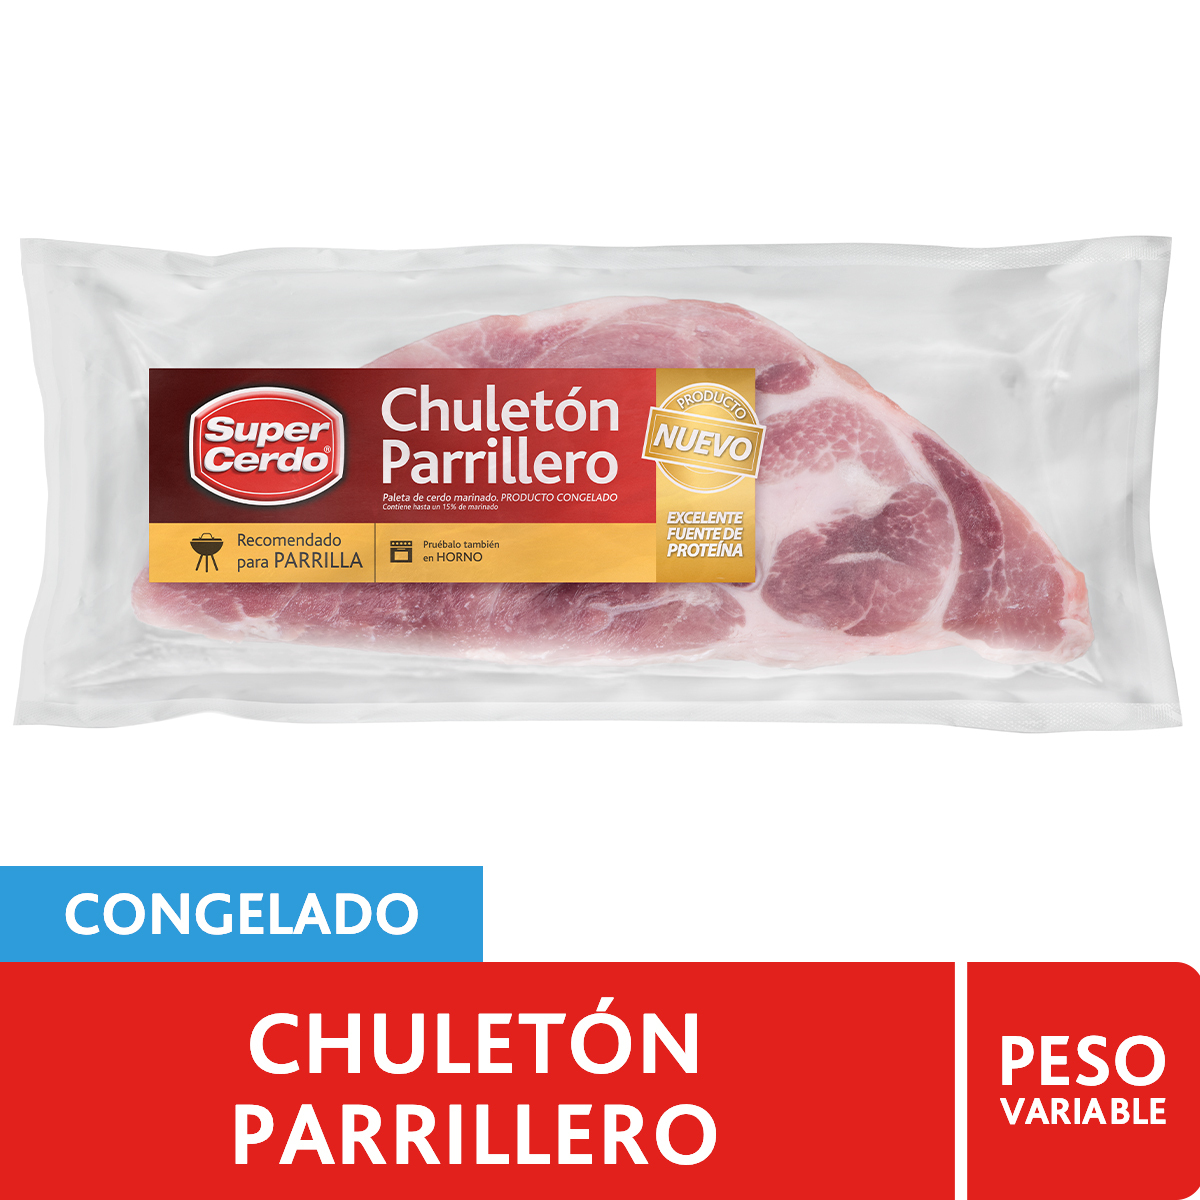 Chuletón Parrillero